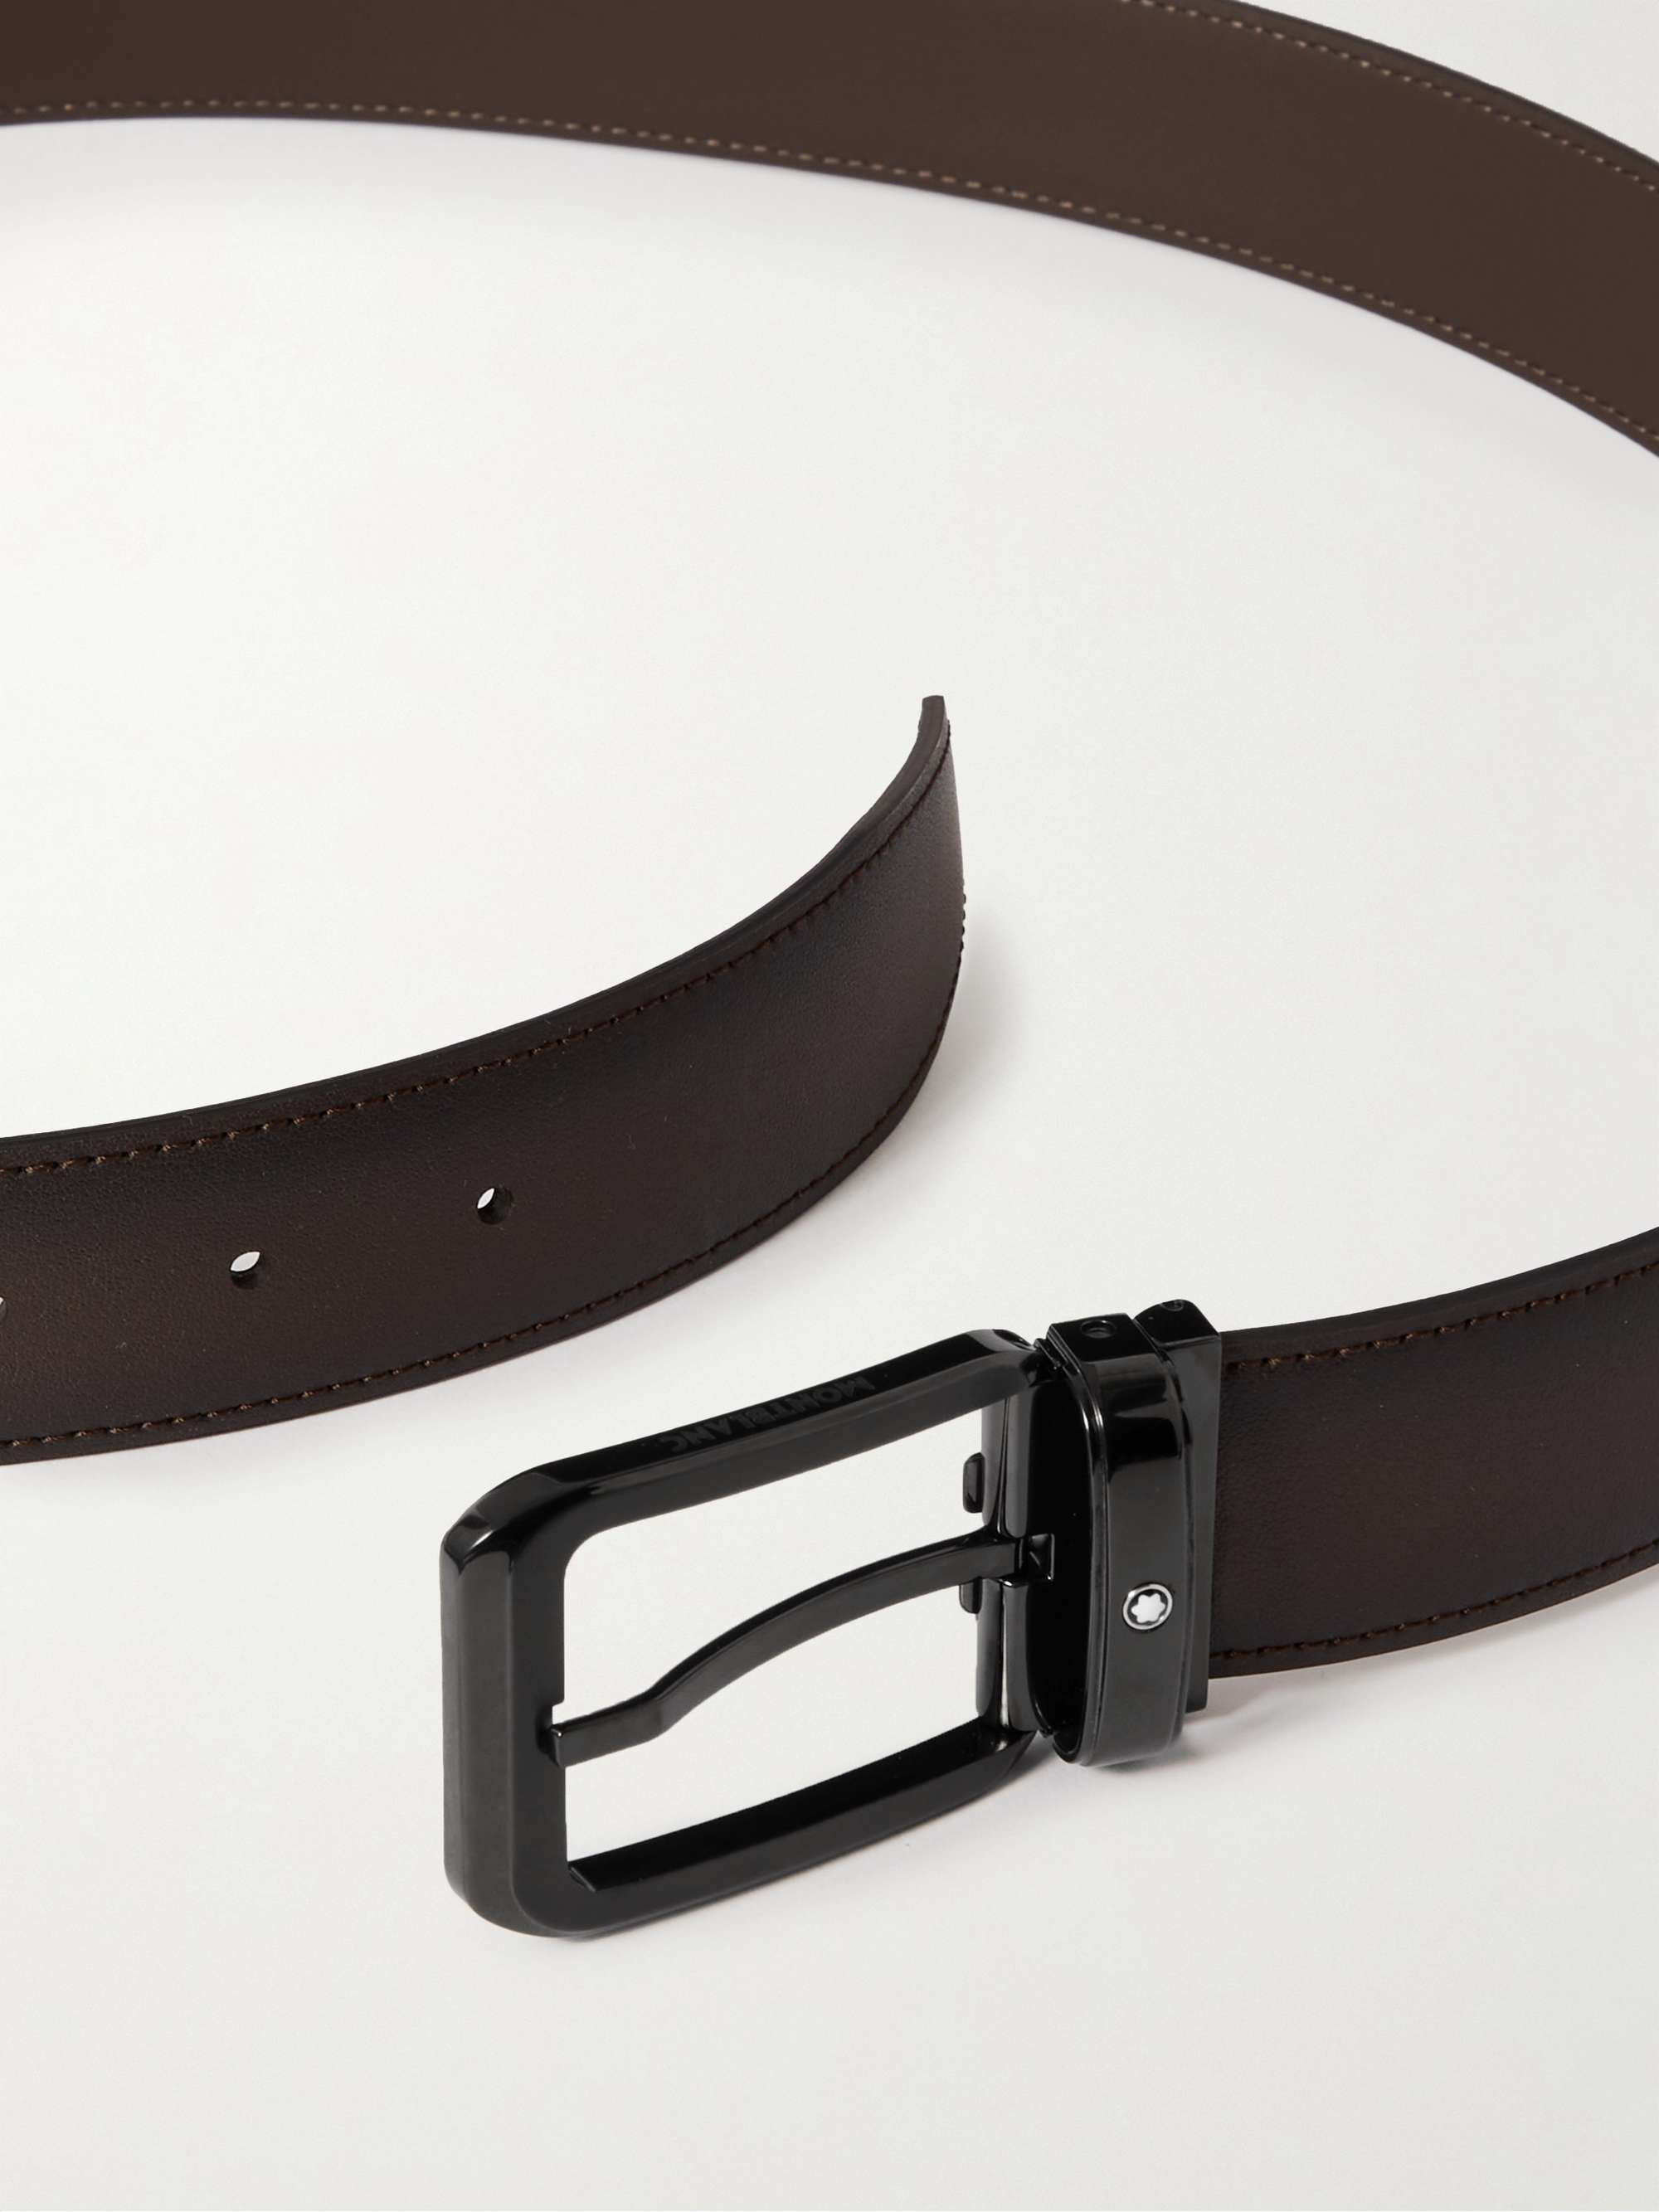 MONTBLANC 3.5cm Leather Belt